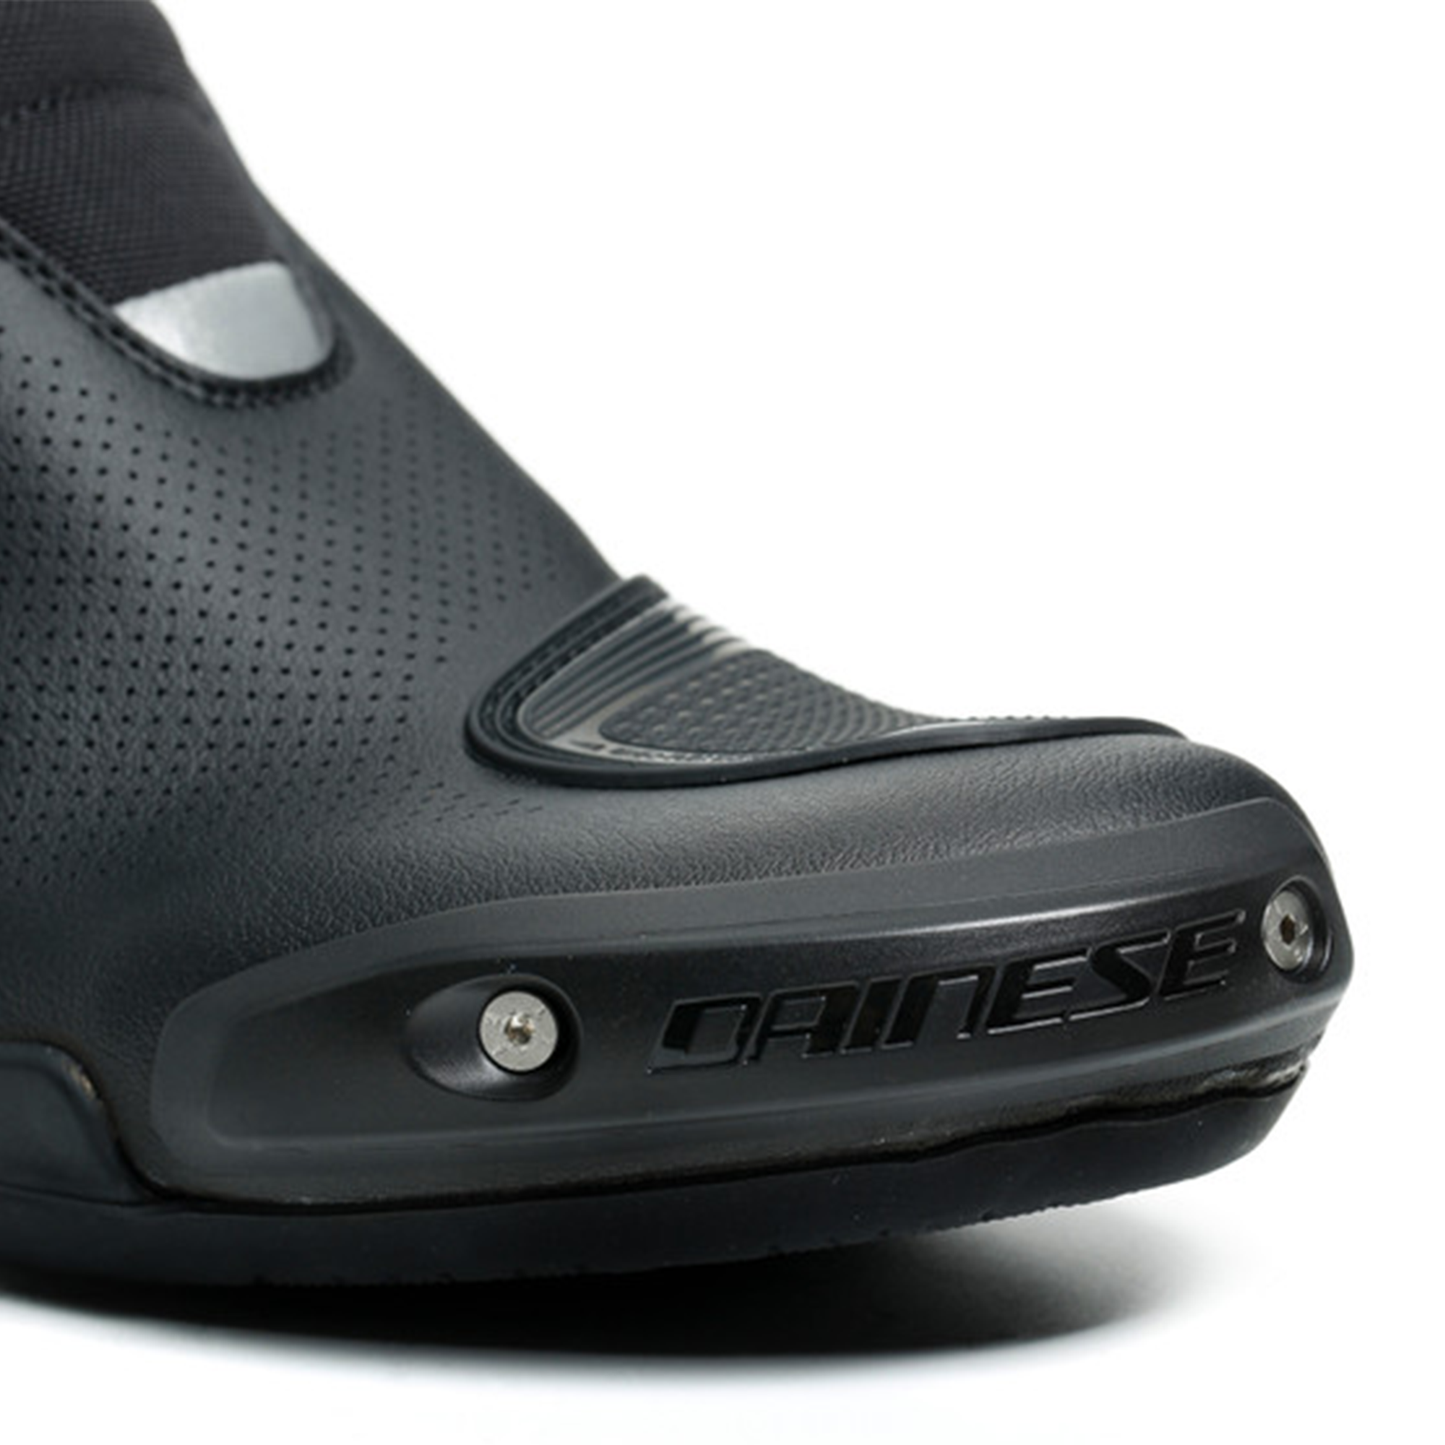 Dainese Sport Master GTX Boots - Black